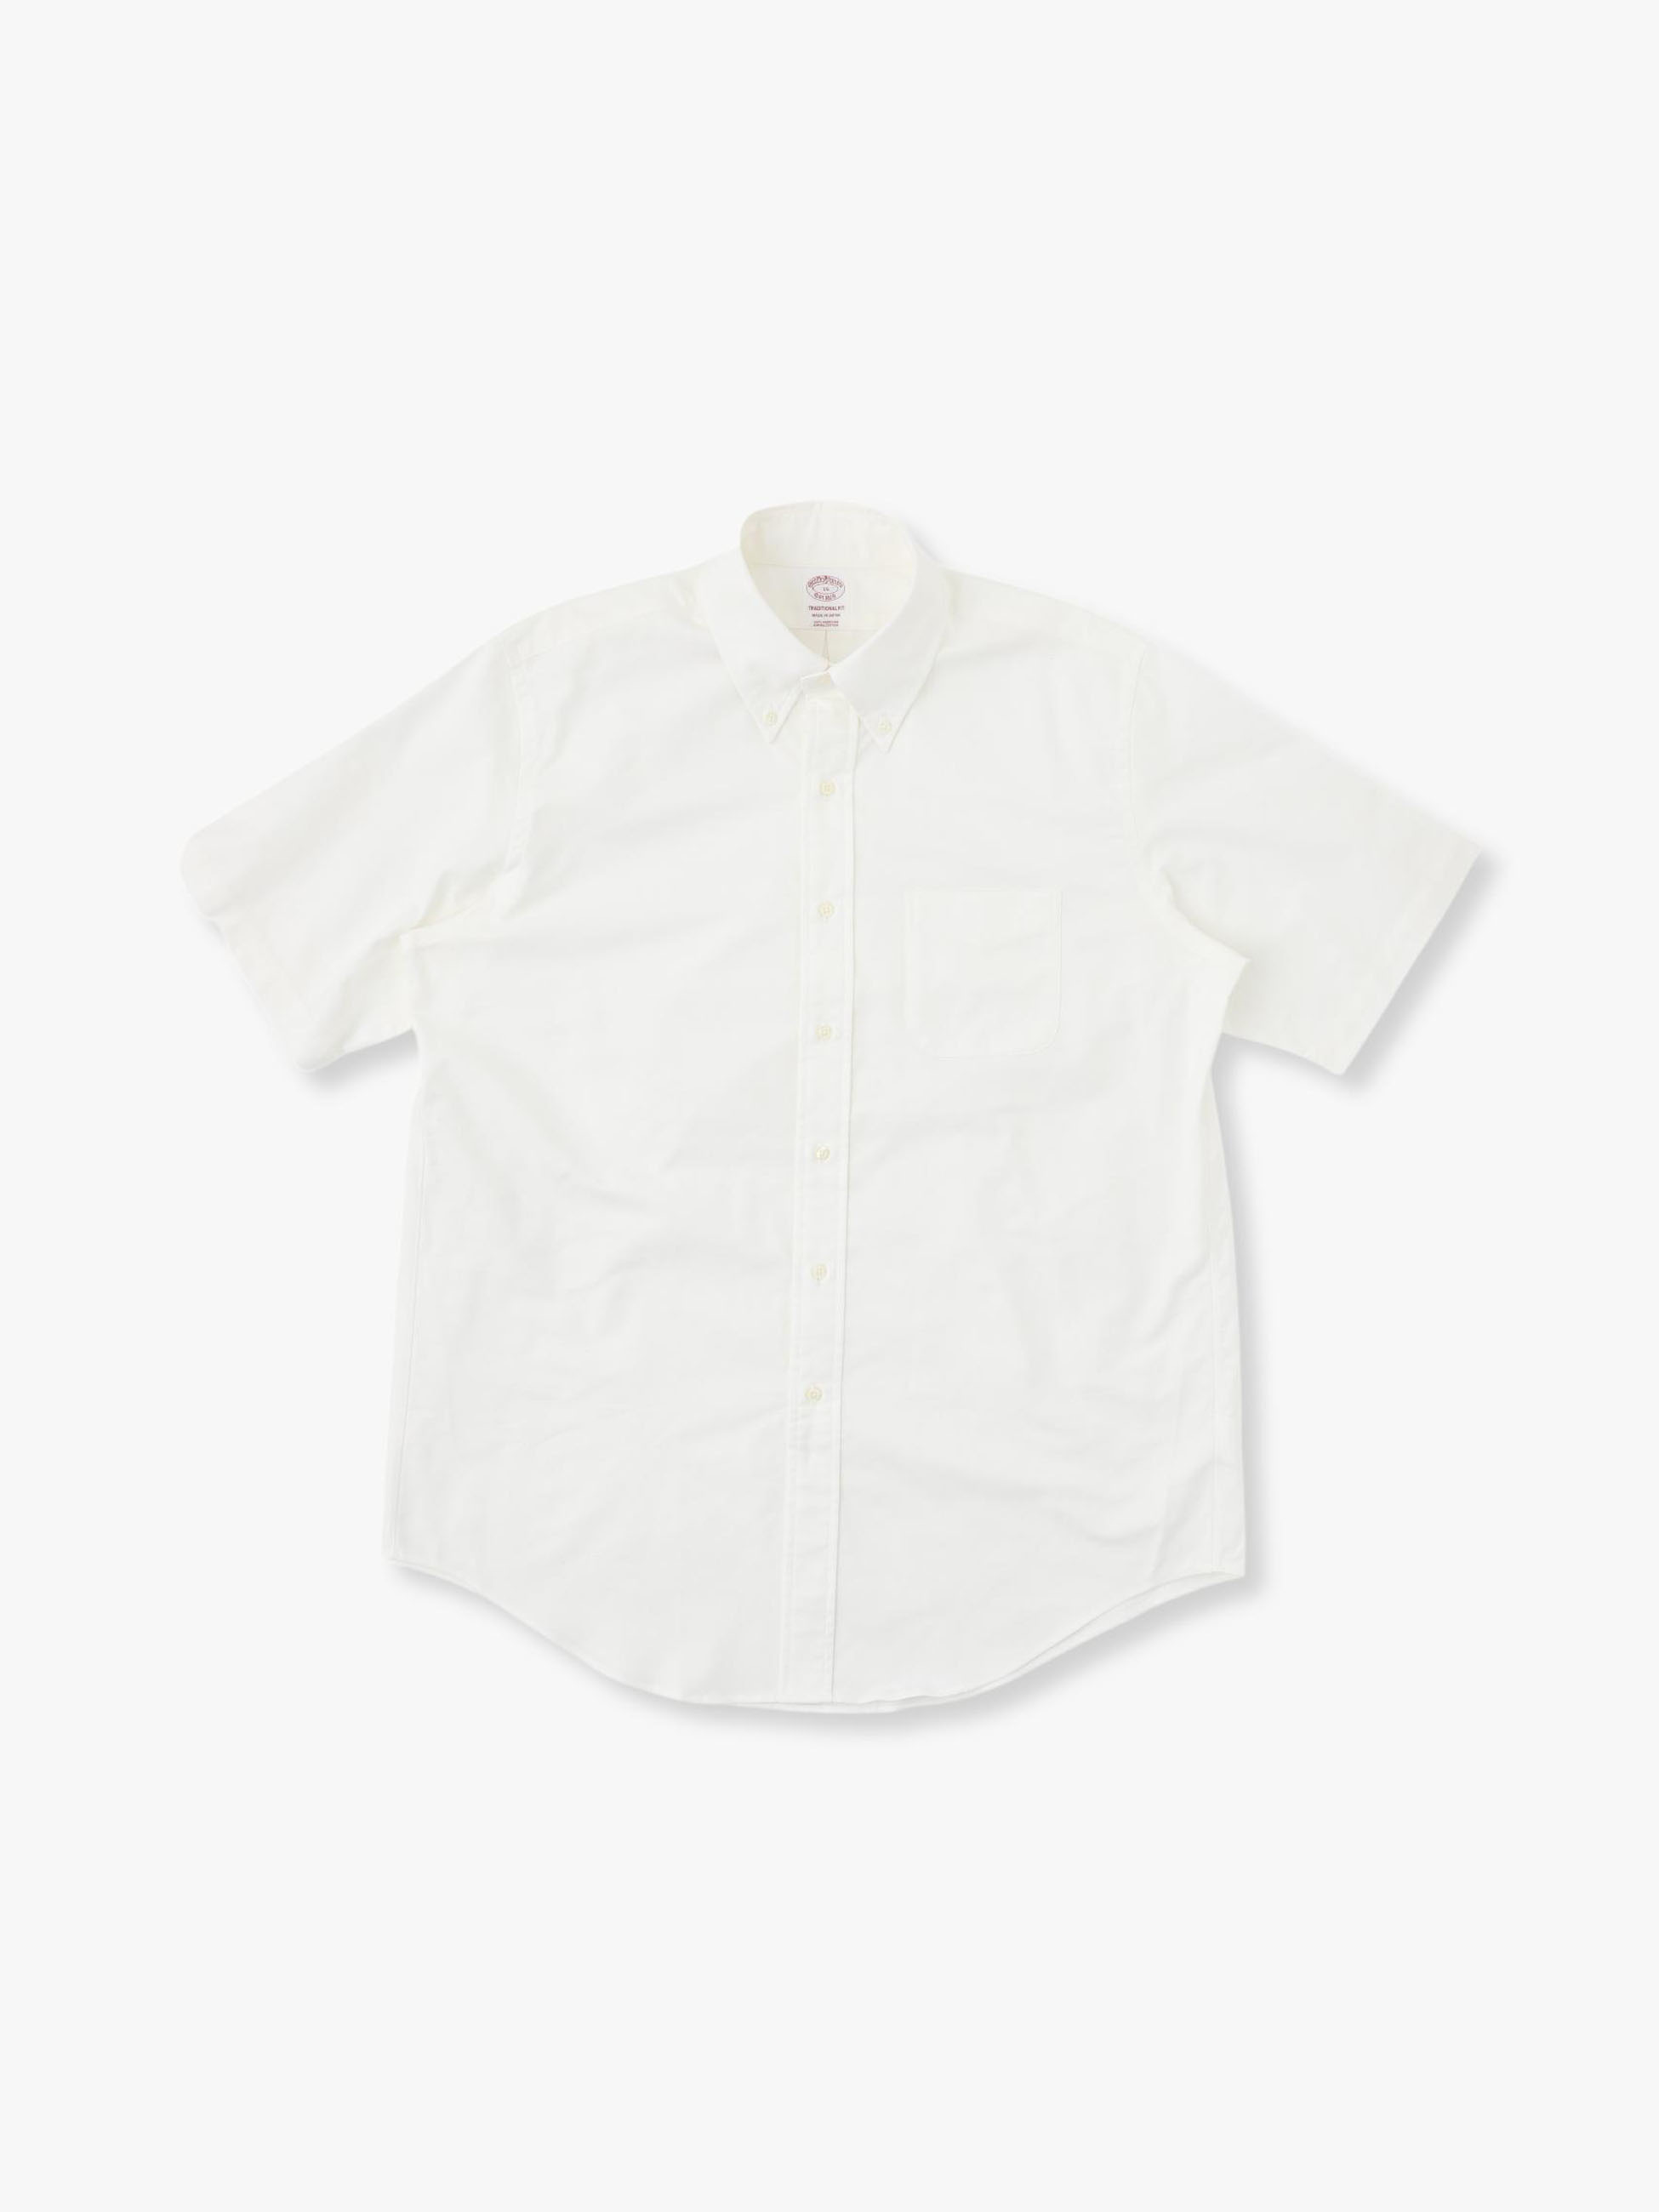 Oxford Button Down Shirt